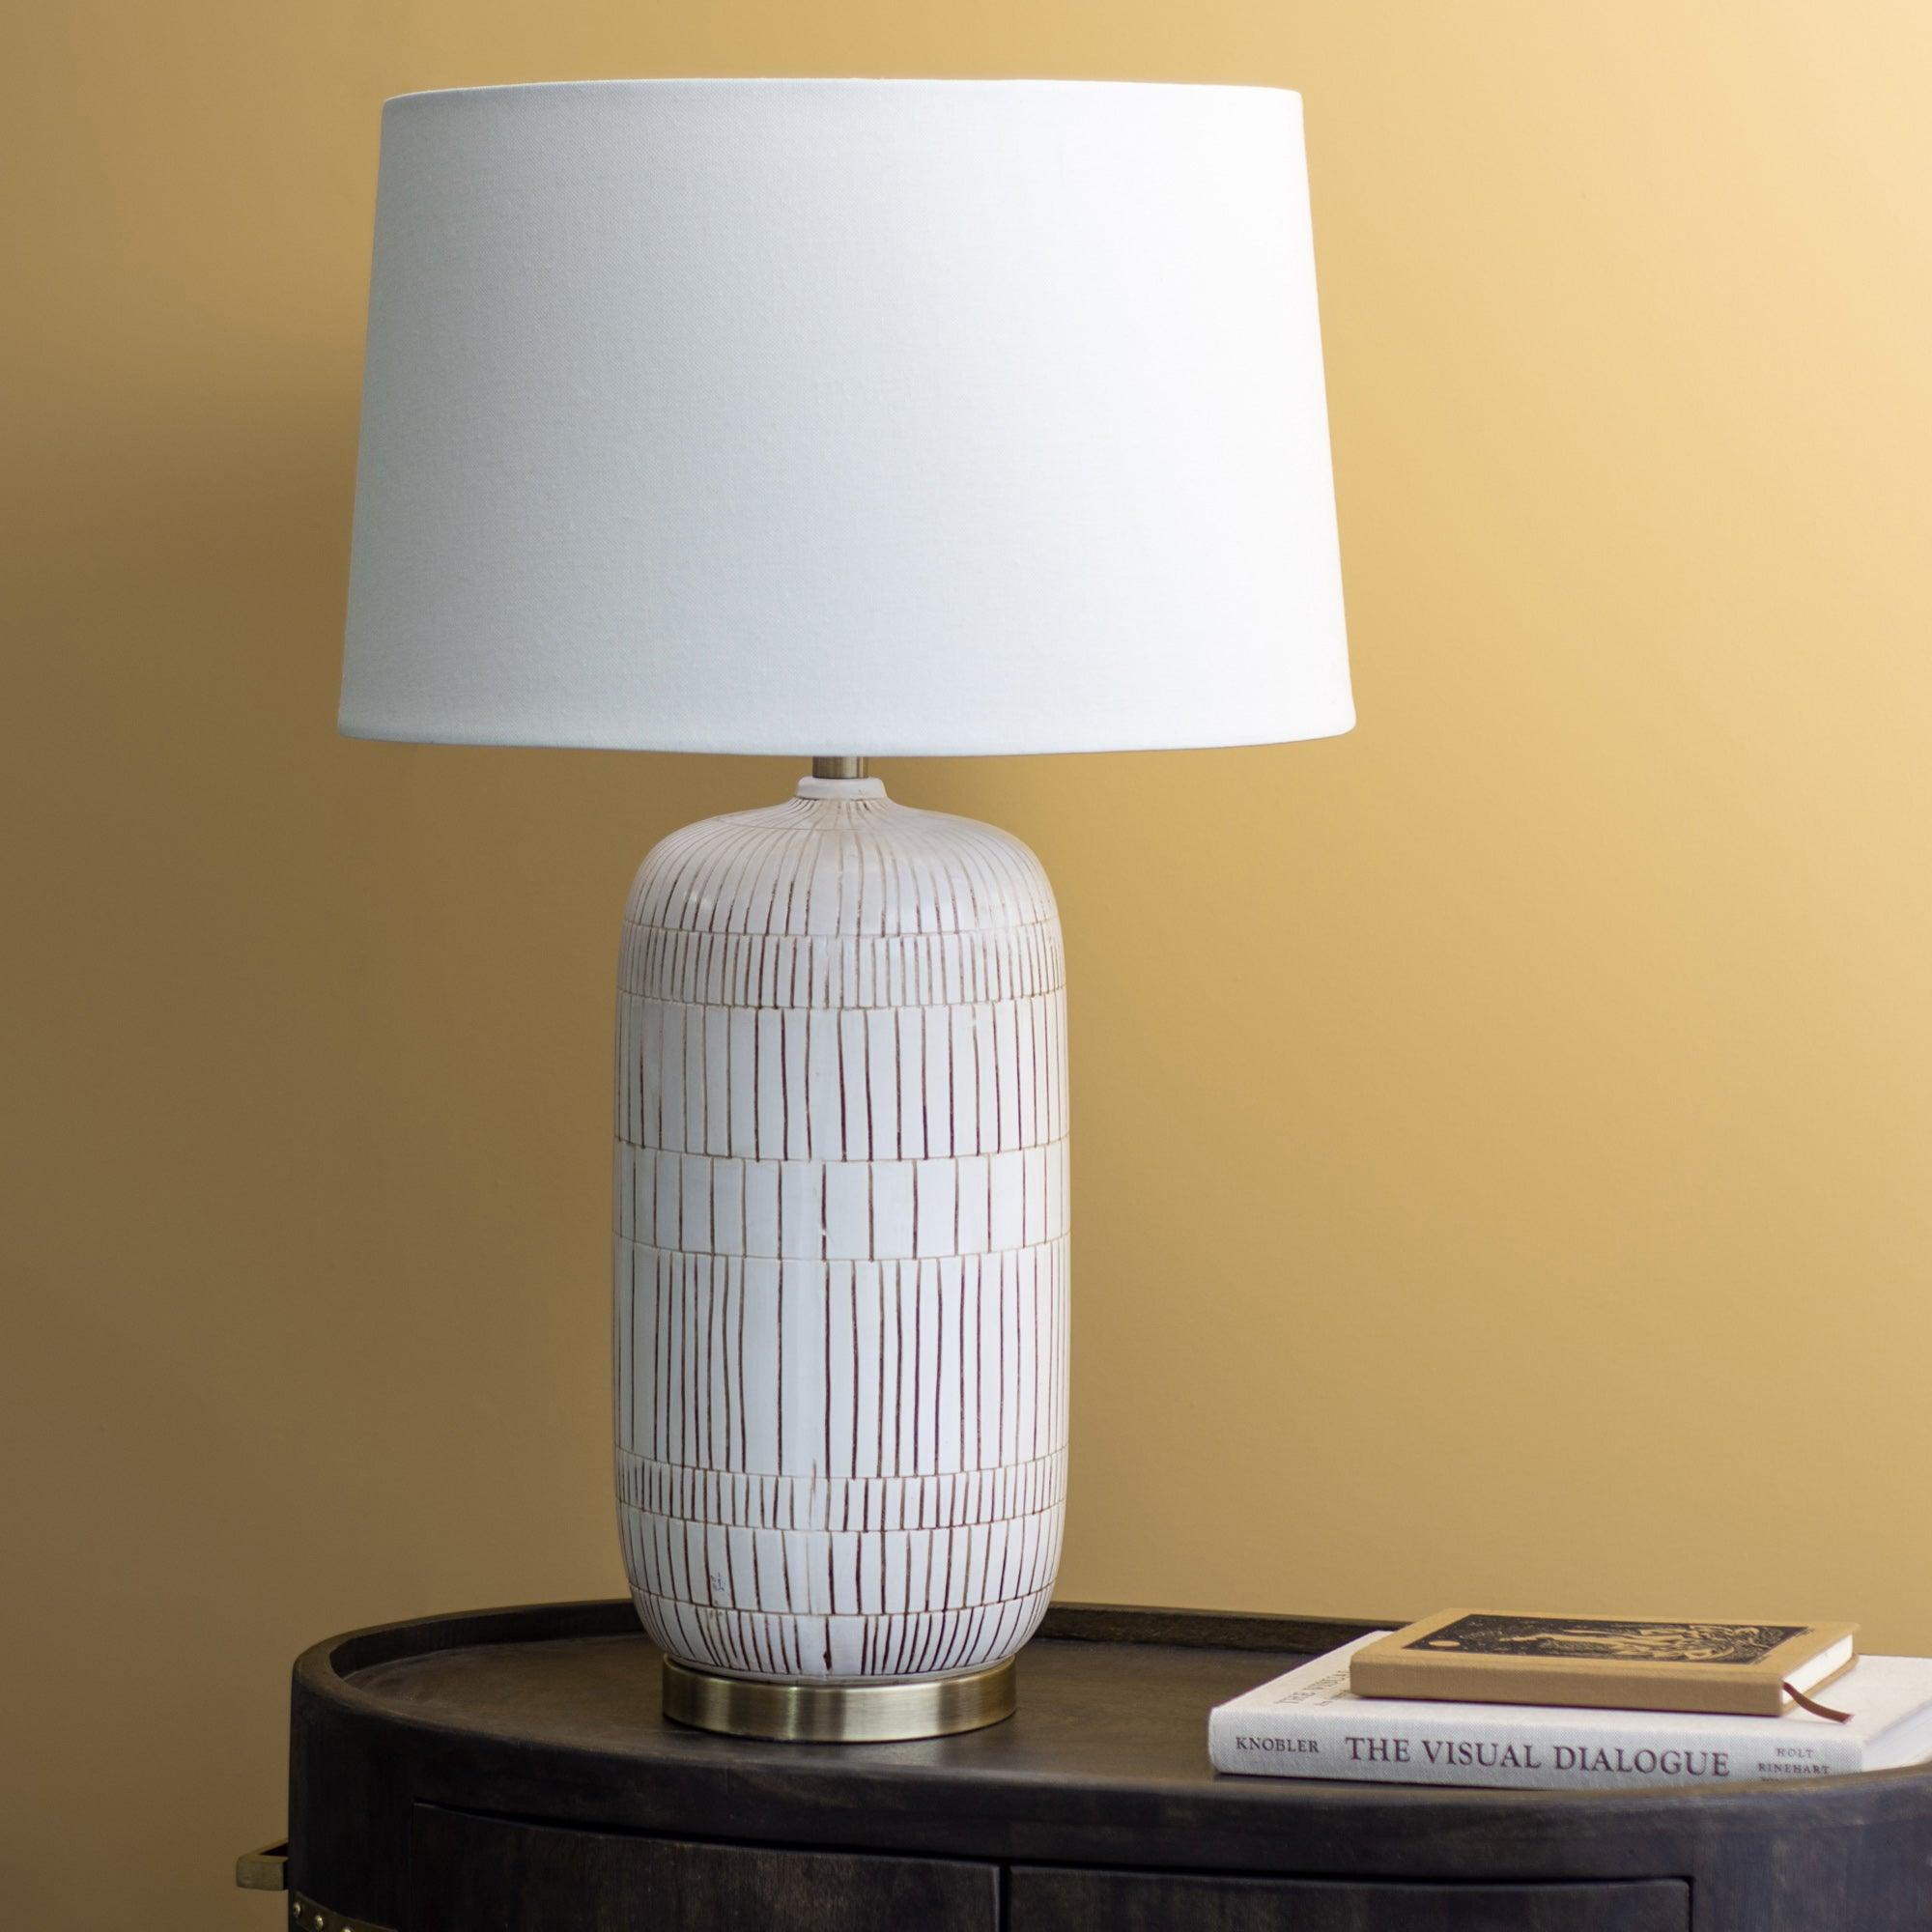 Pierce Table Lamp - Reimagine Designs - Table Lamp